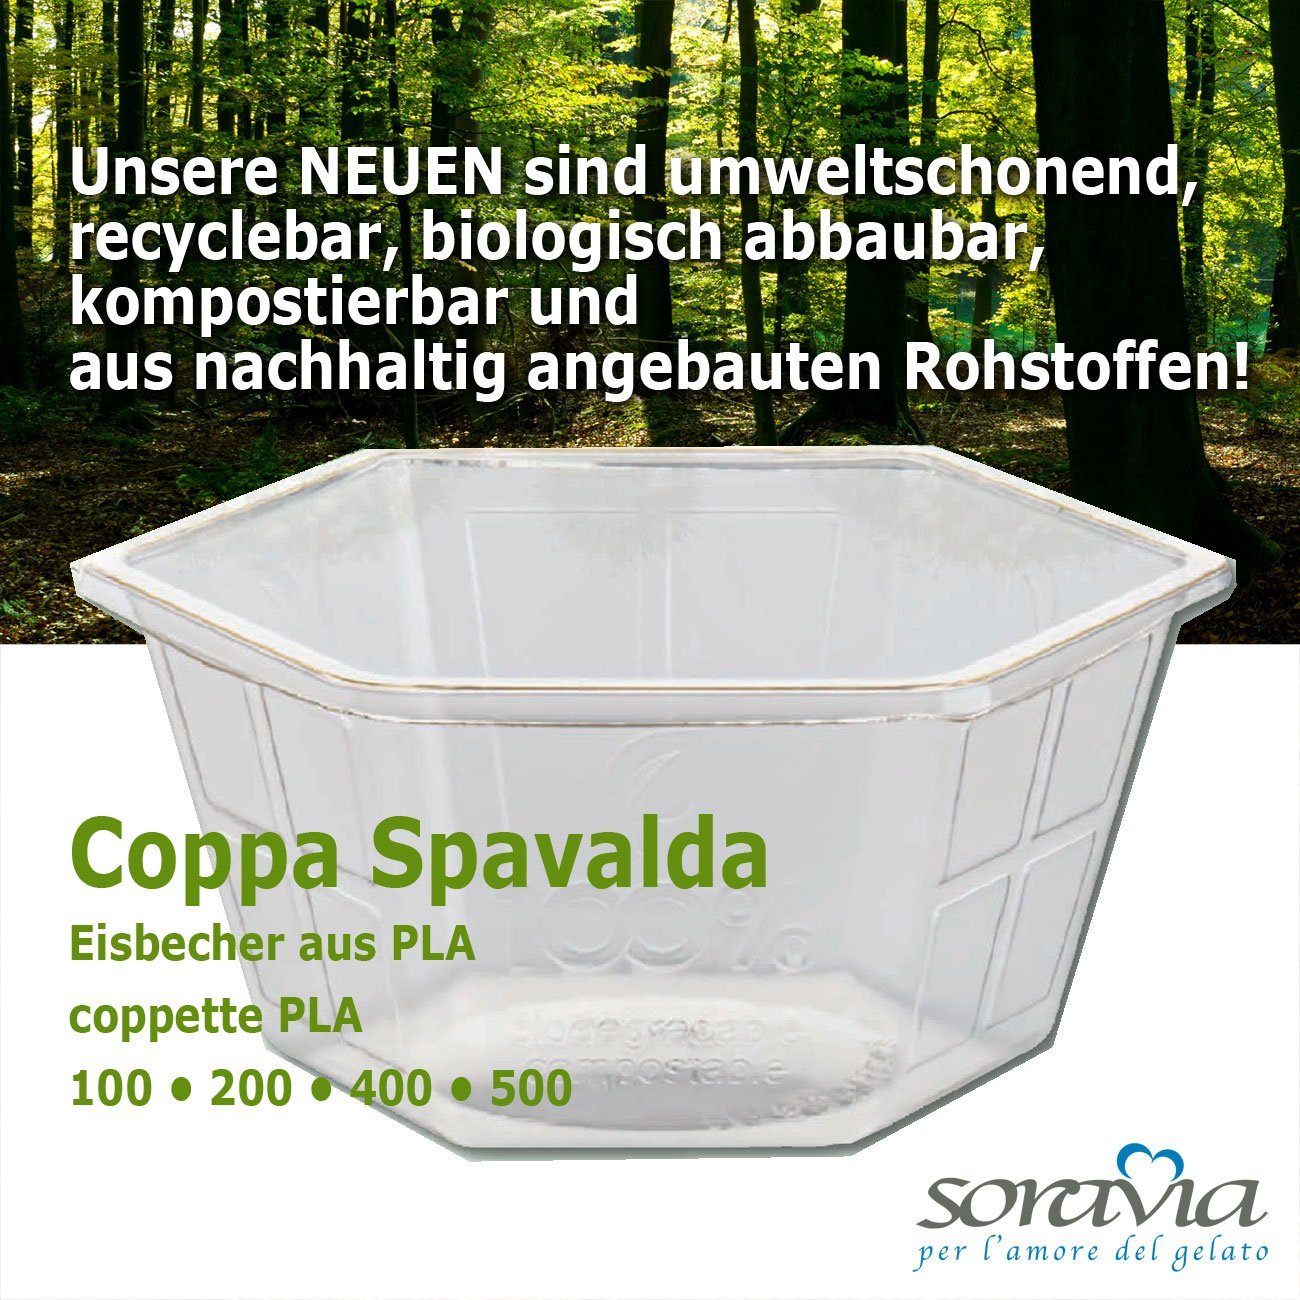 Coppa Spavalda 200 - box 1600 pieces - Ice cup biodegradable Plastic - coppa plastica 